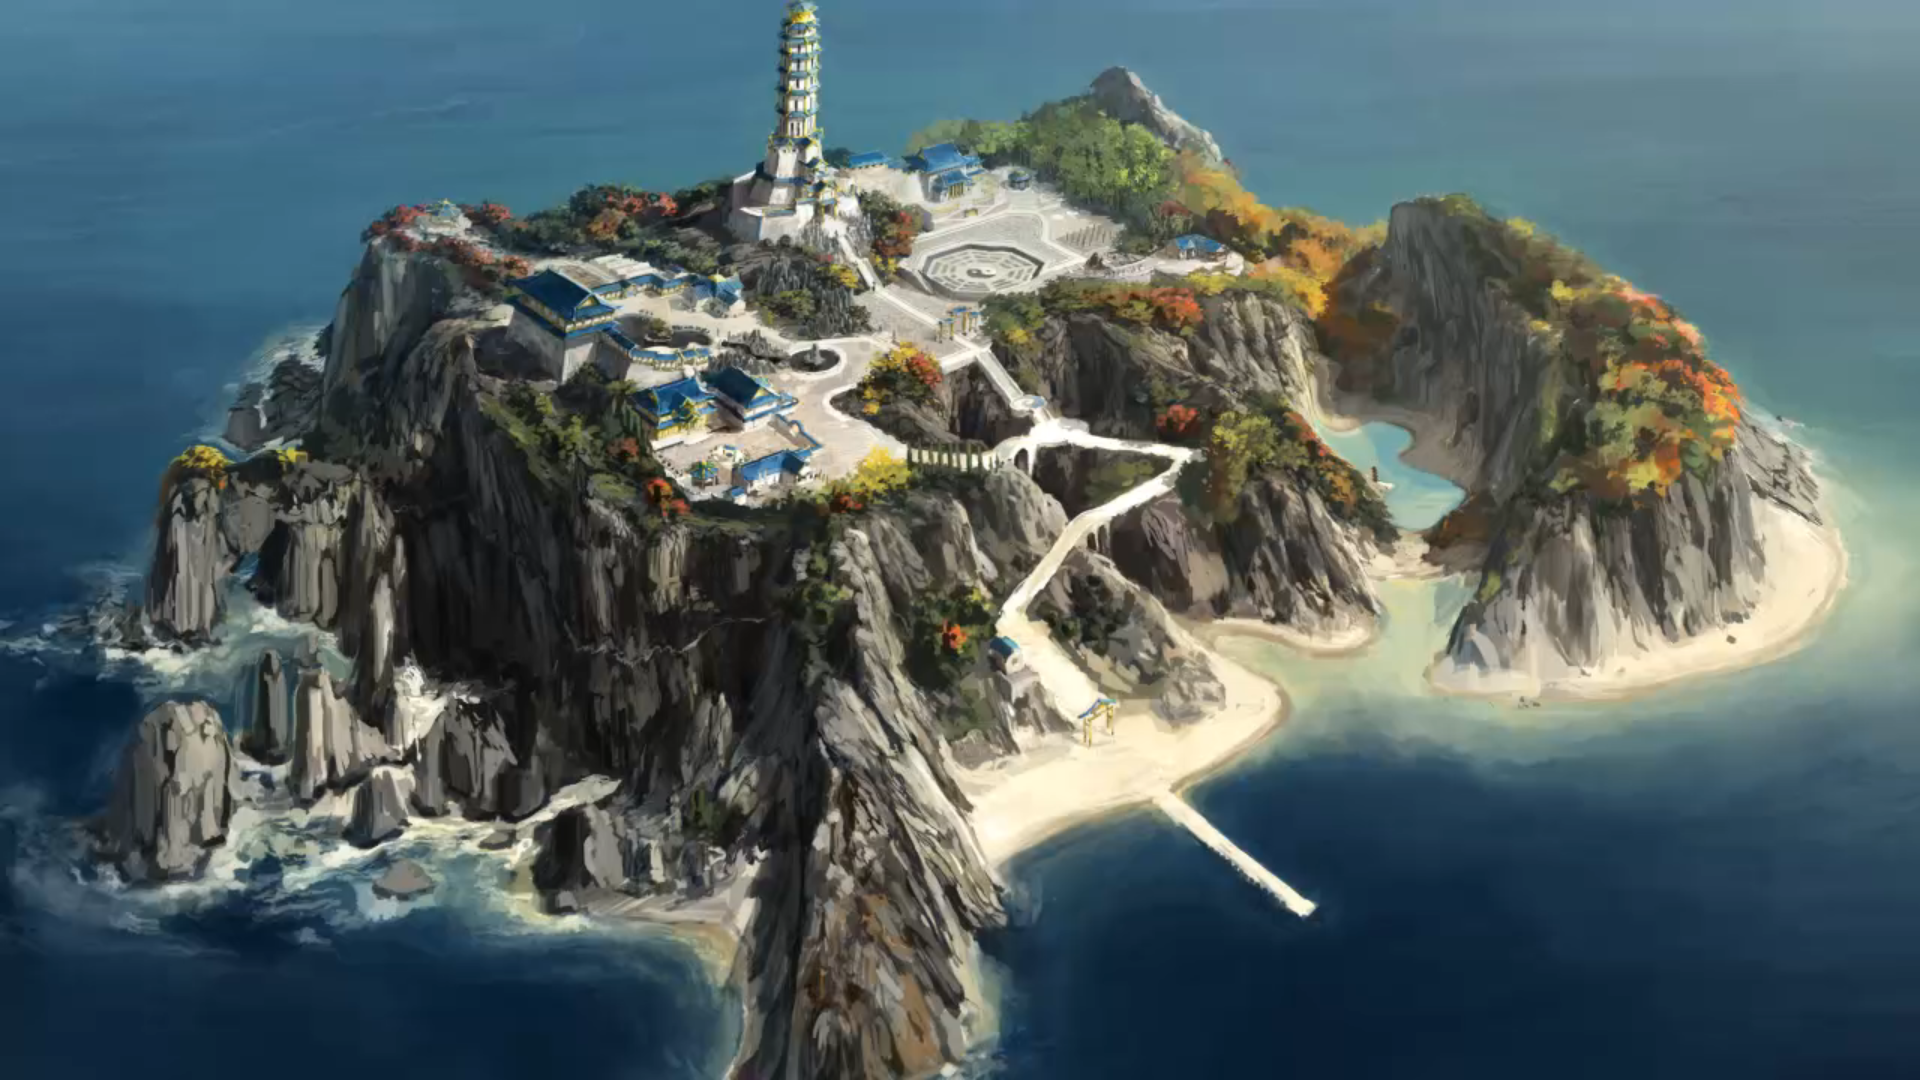 Аватар корра островной храм воздуха. Animeverse island